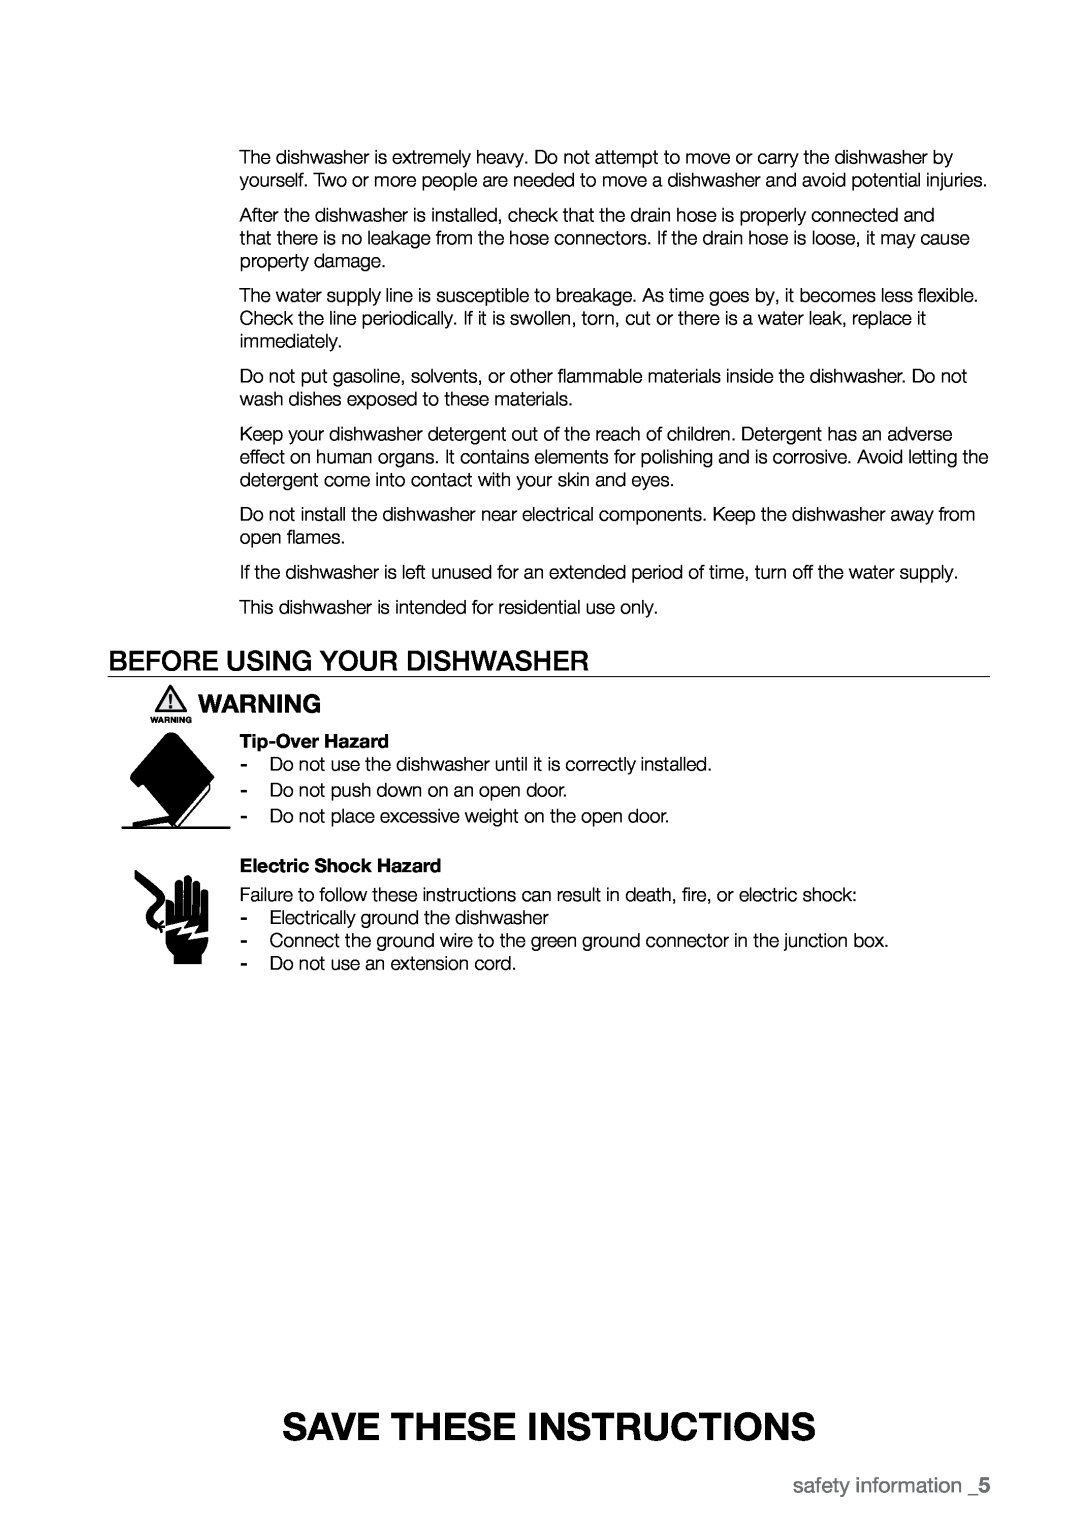 Samsung DMRLHW, DMRLHB Before using your dishwasher, Tip-Over Hazard, Electric Shock Hazard, Save these instructions 